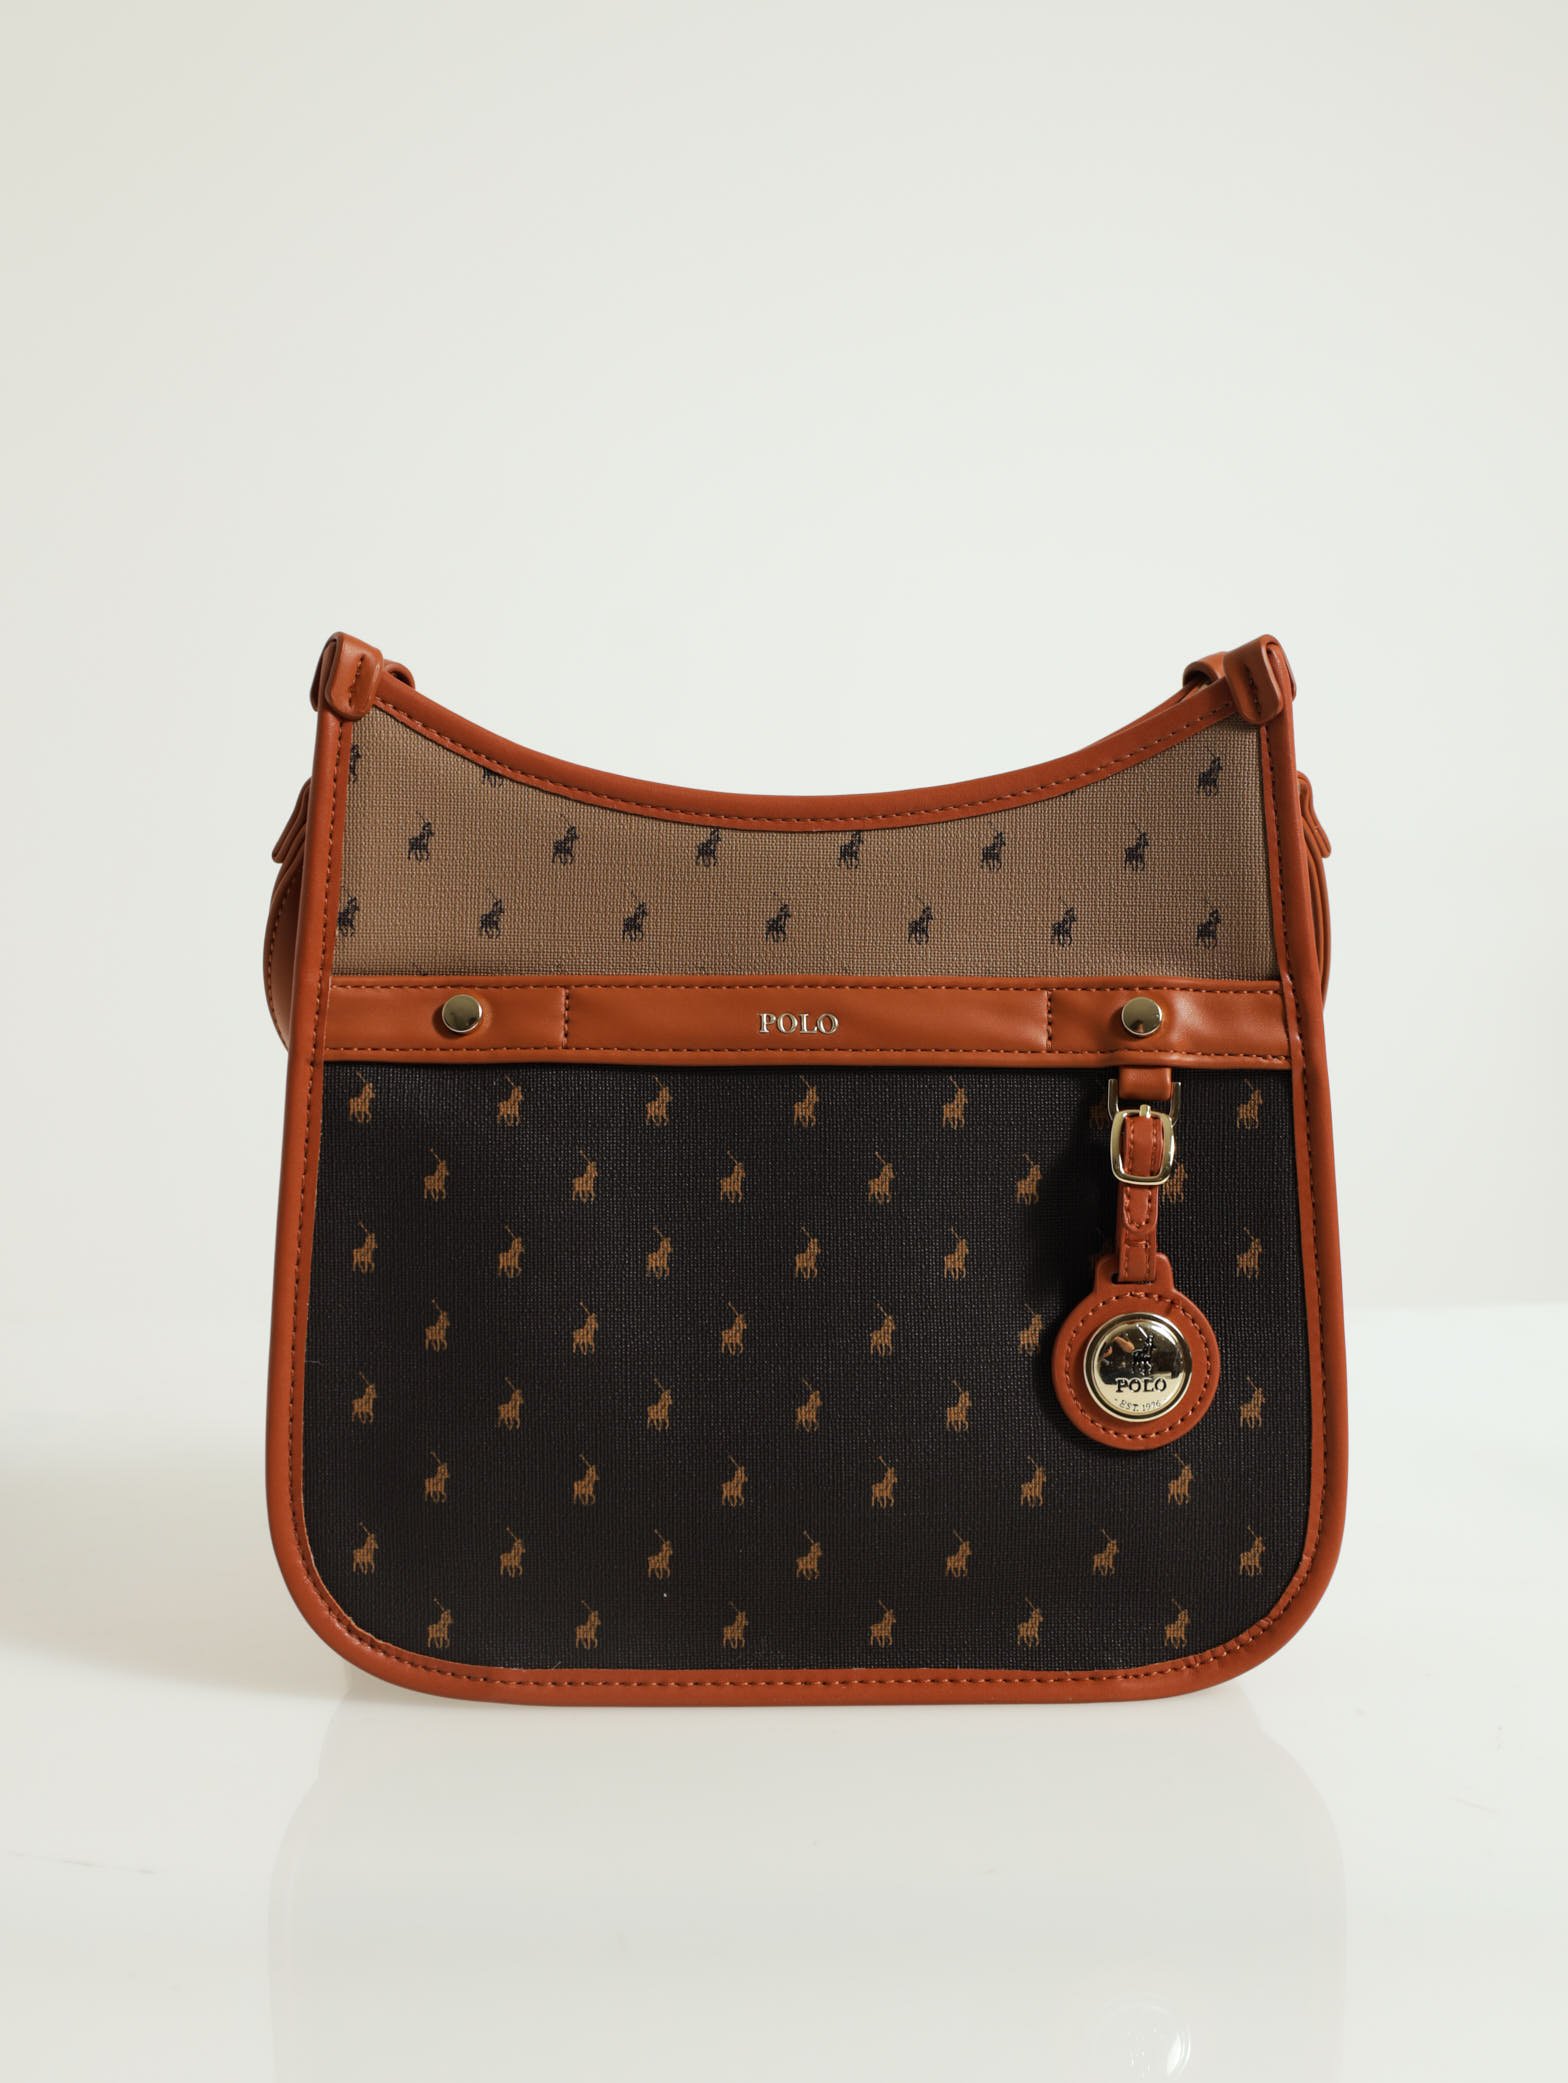 Lady's Briciole Medium Size Hang Bag Black/Beige With Detachable Strap |  eBay